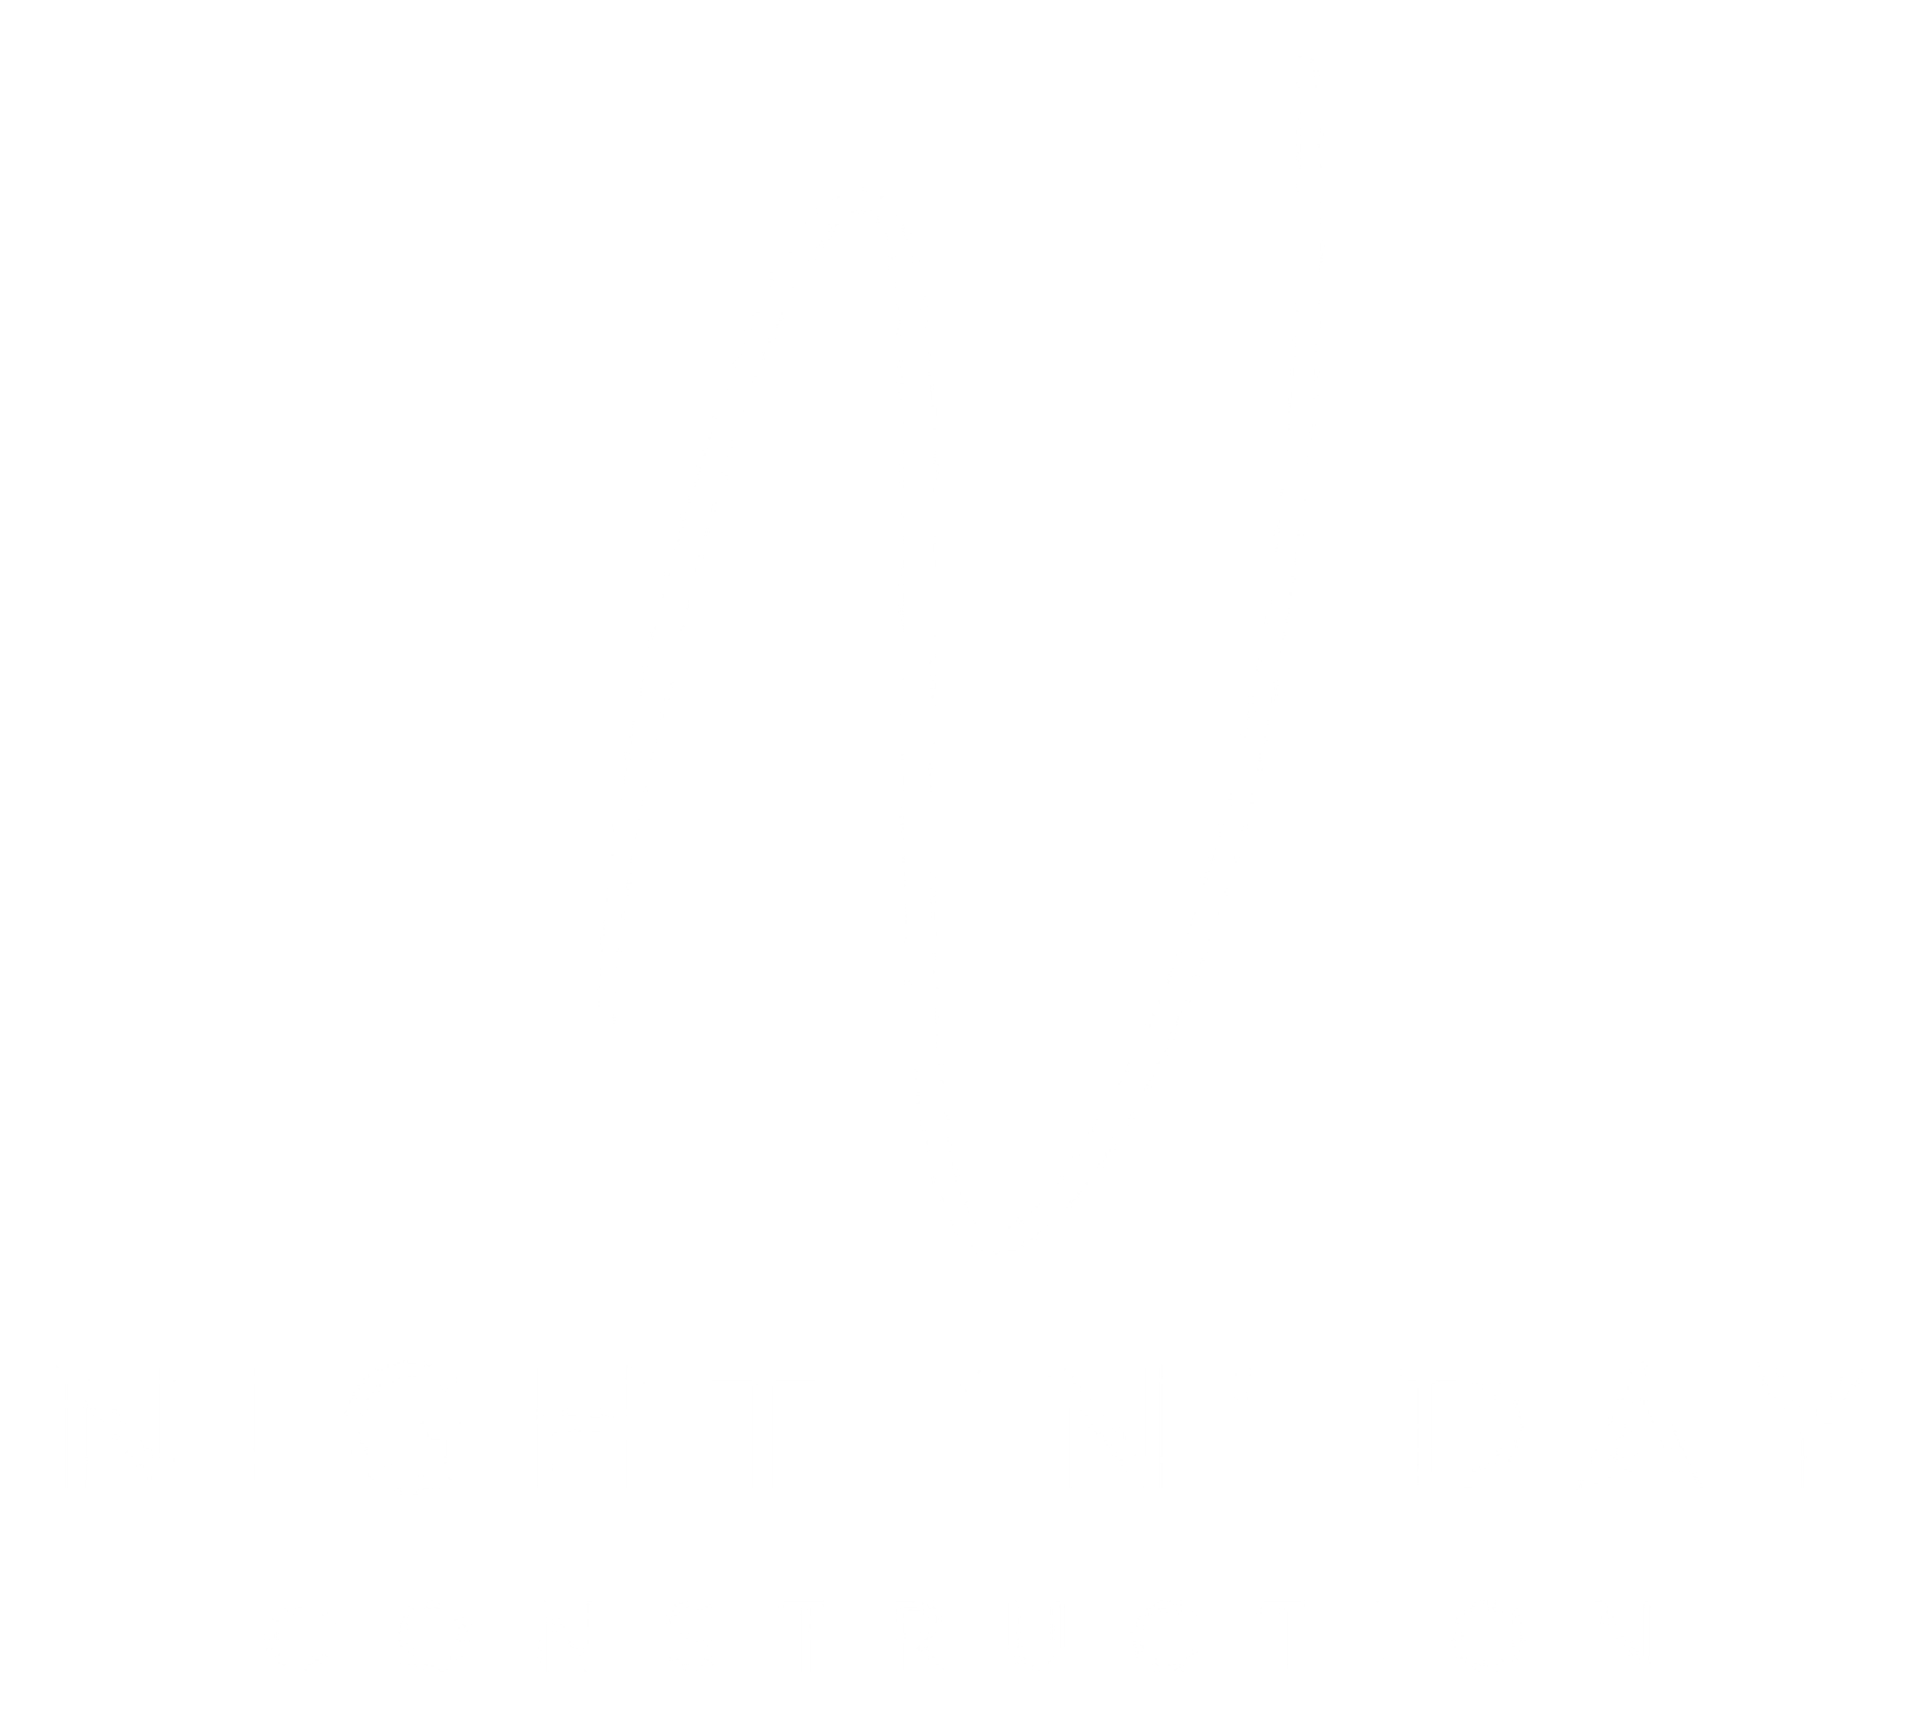 Night N Day Construction logo.